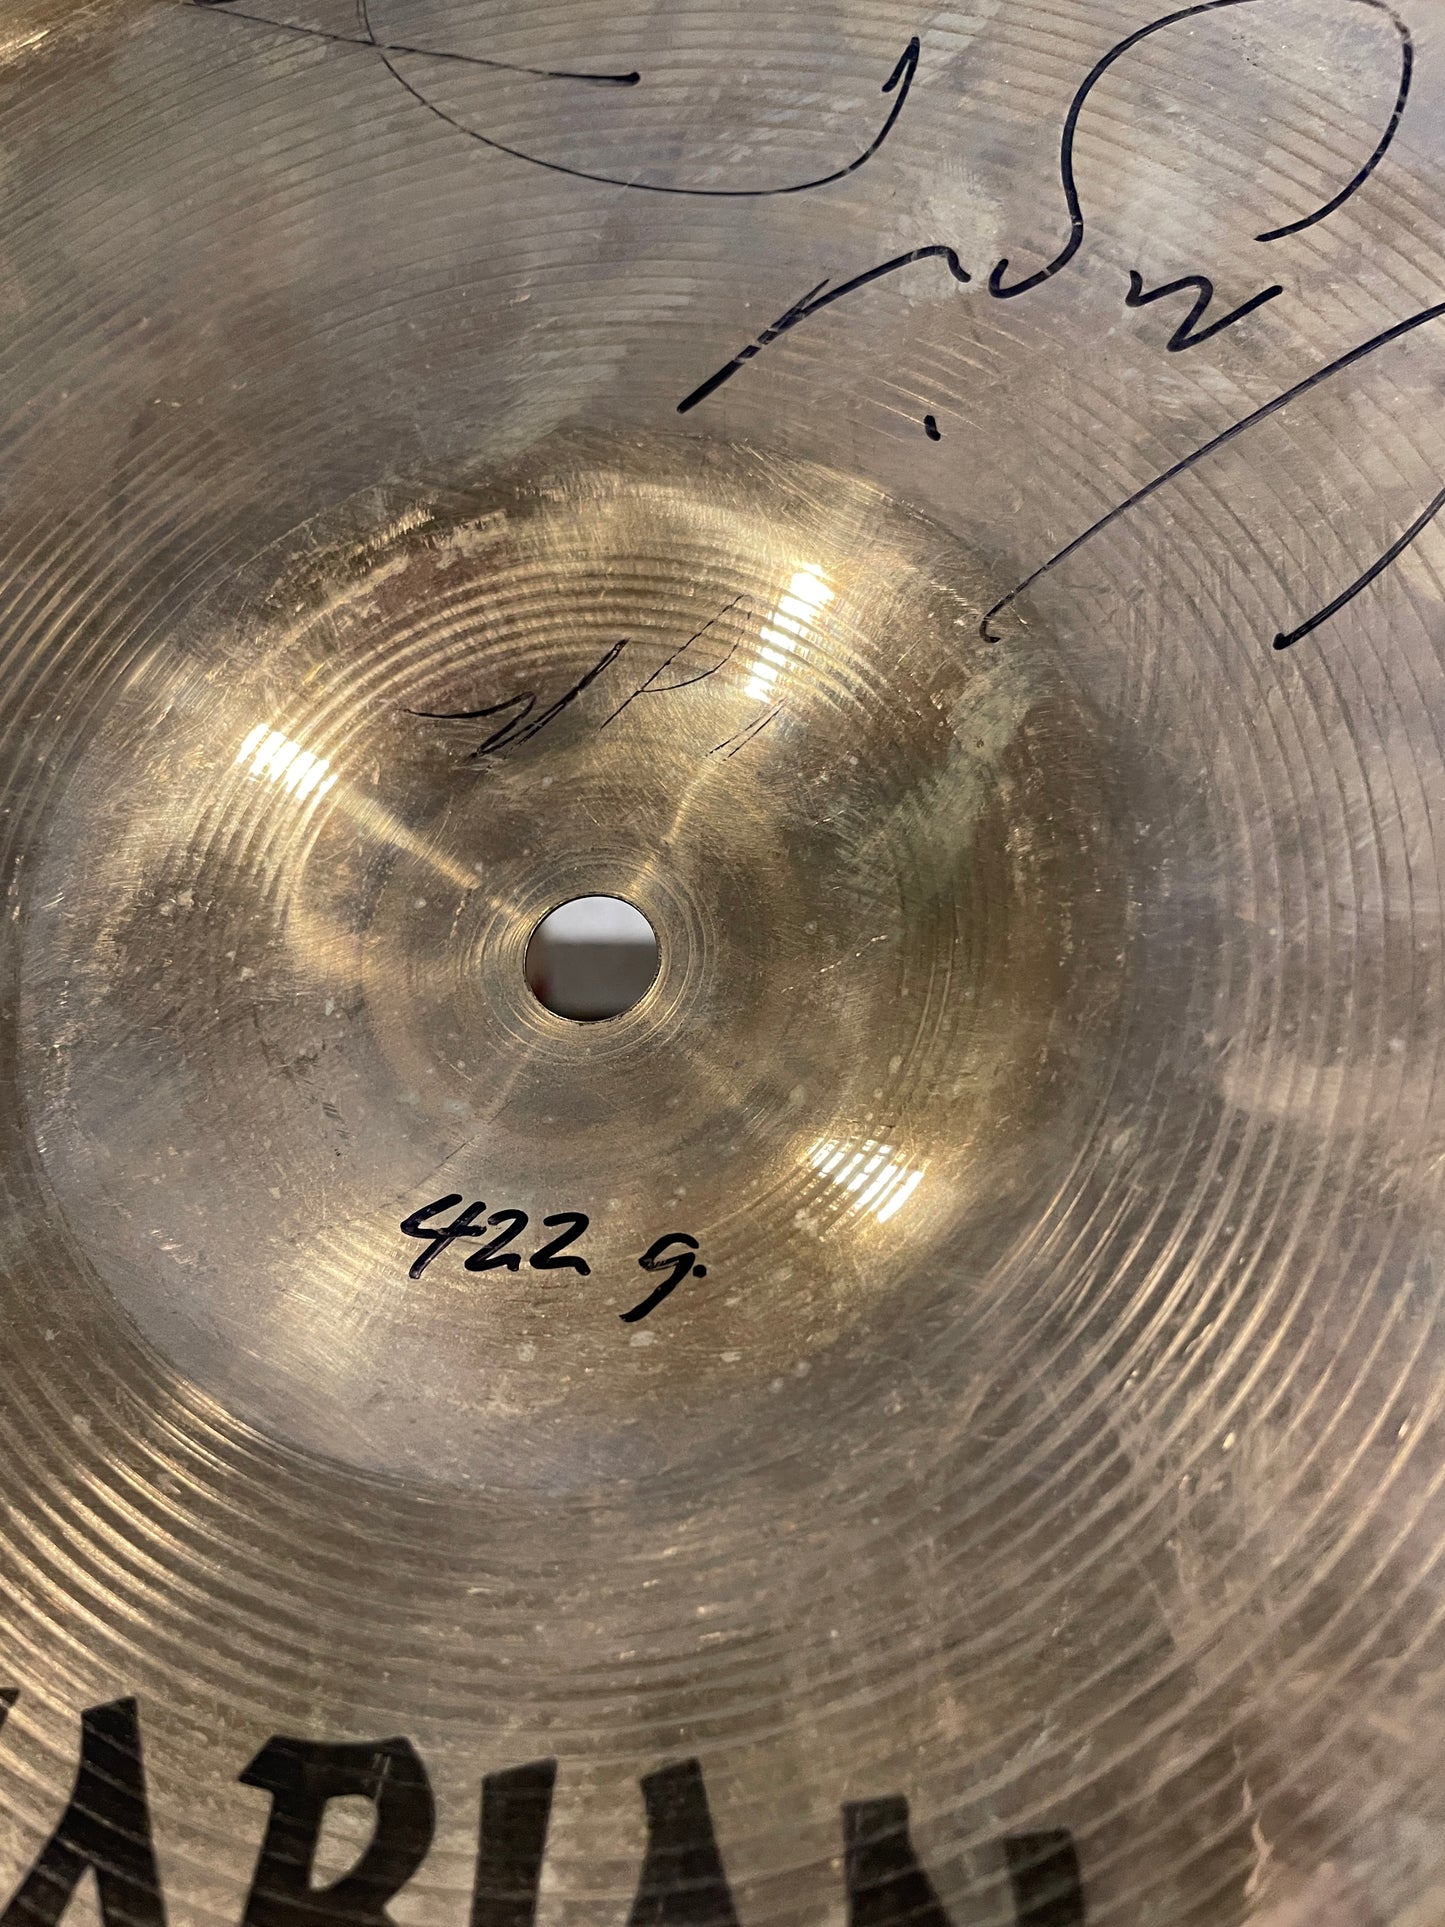 12" Sabian Hand Hammered HH Mini Chinese China Cymbal 422g Virgil Donati